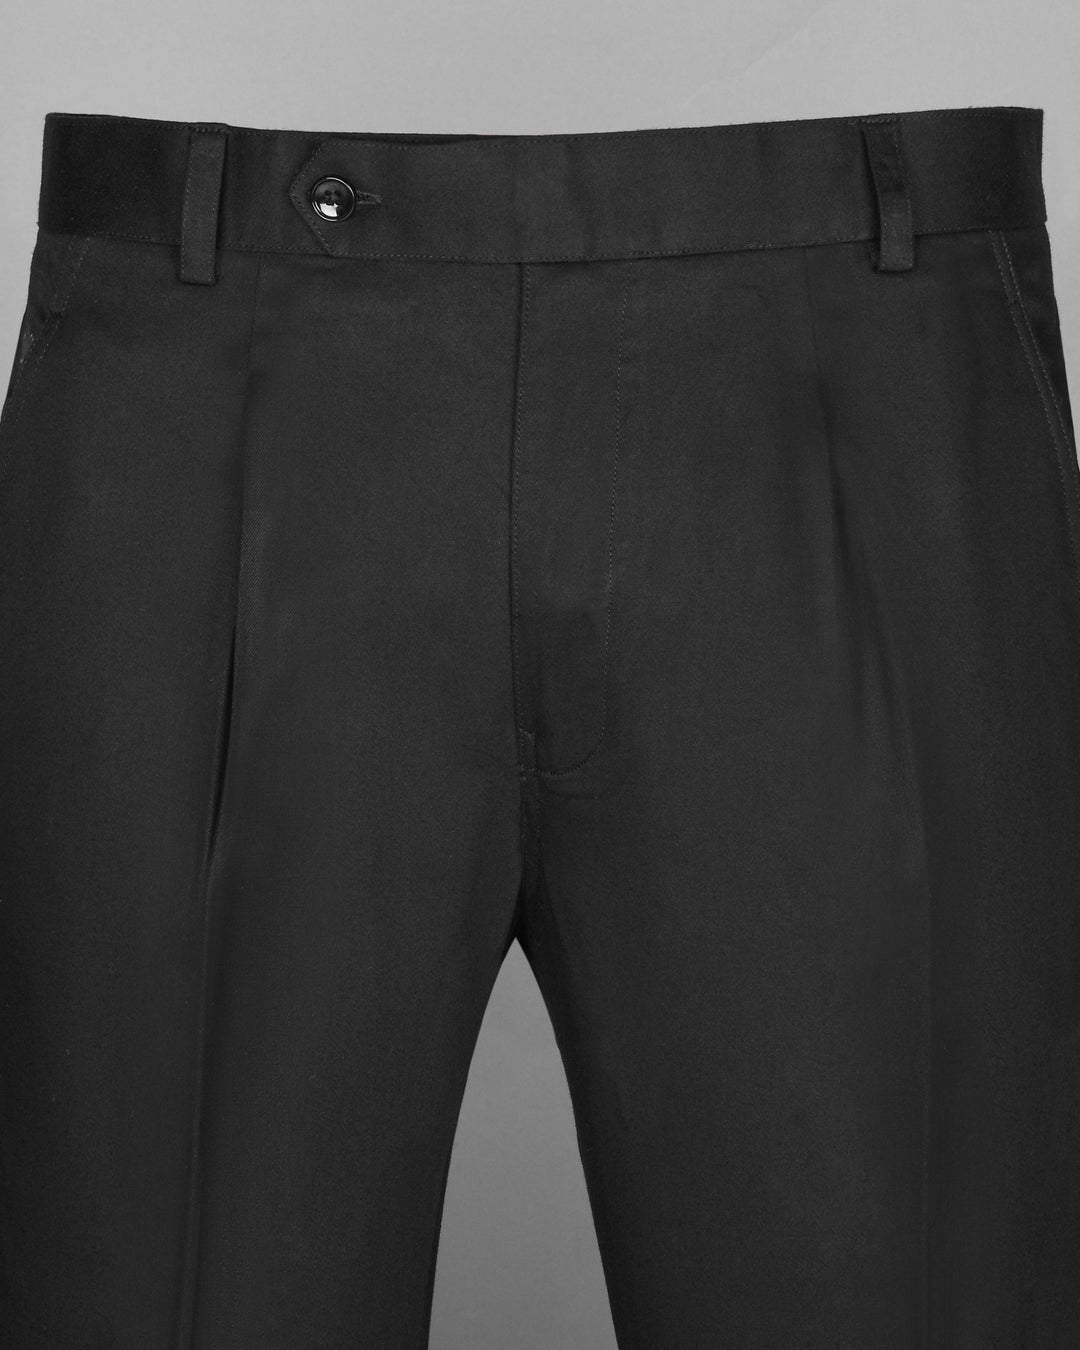 KJUS Mens FORMULA Ski Pants MS20-205 - Size 54 XL US 44 - Black - NEW  w/tags | eBay